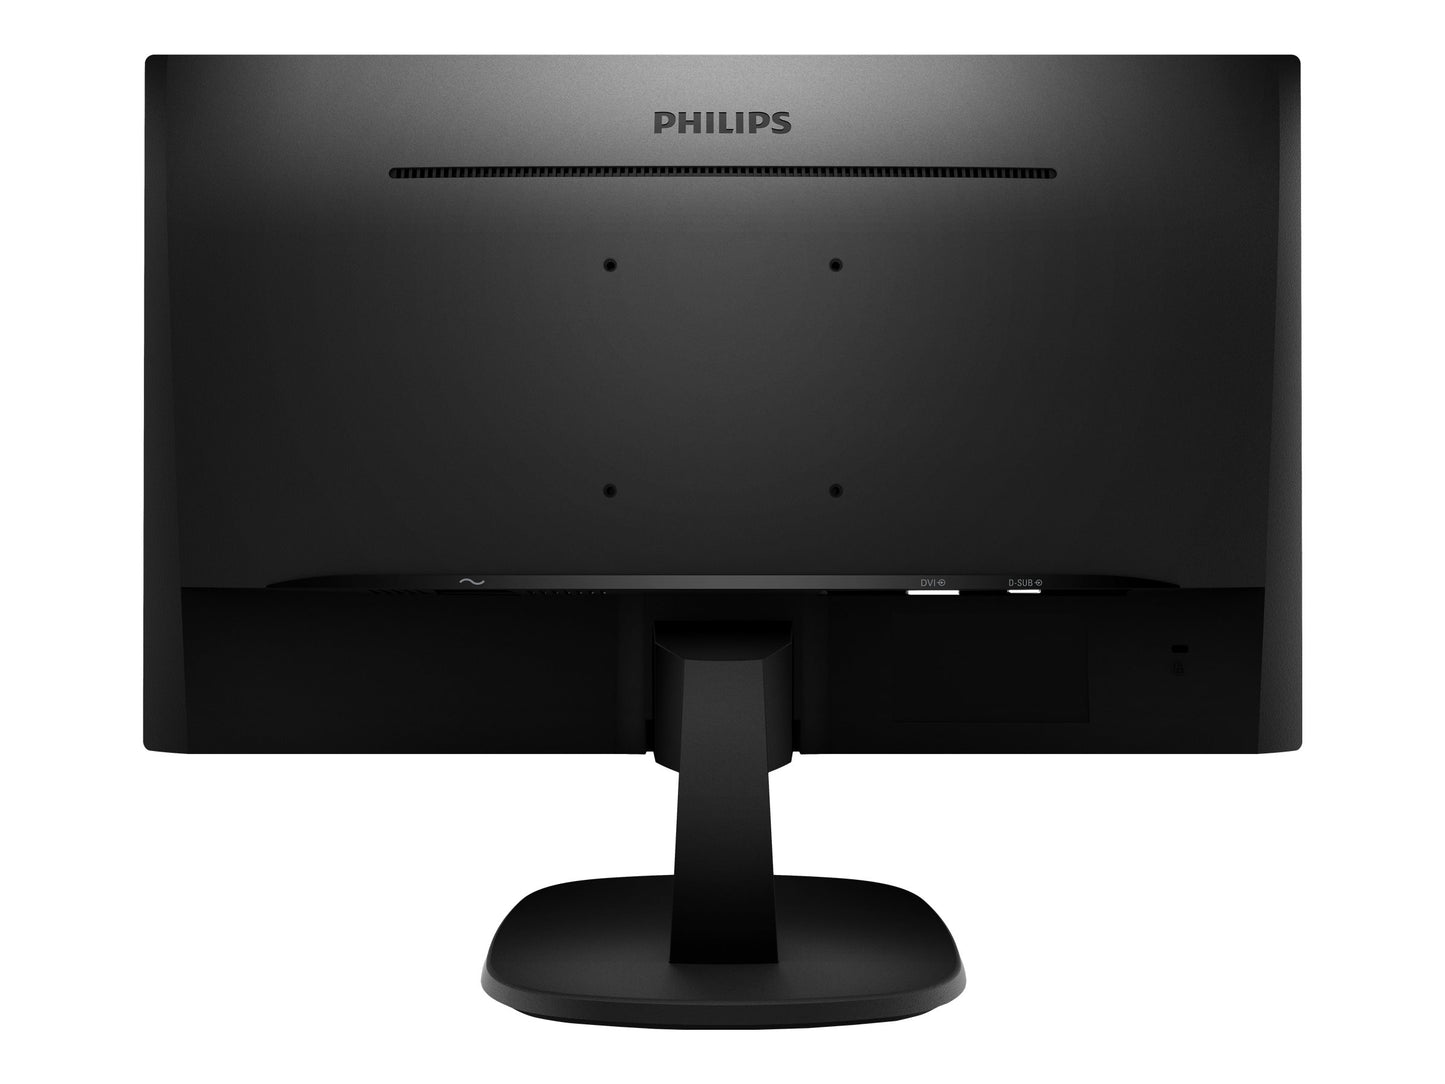 Philips - 24 Zoll FHD Monitor (1920x1080, 60 Hz, VGA, DVI, HDMI, Lautsprecher) schwarz